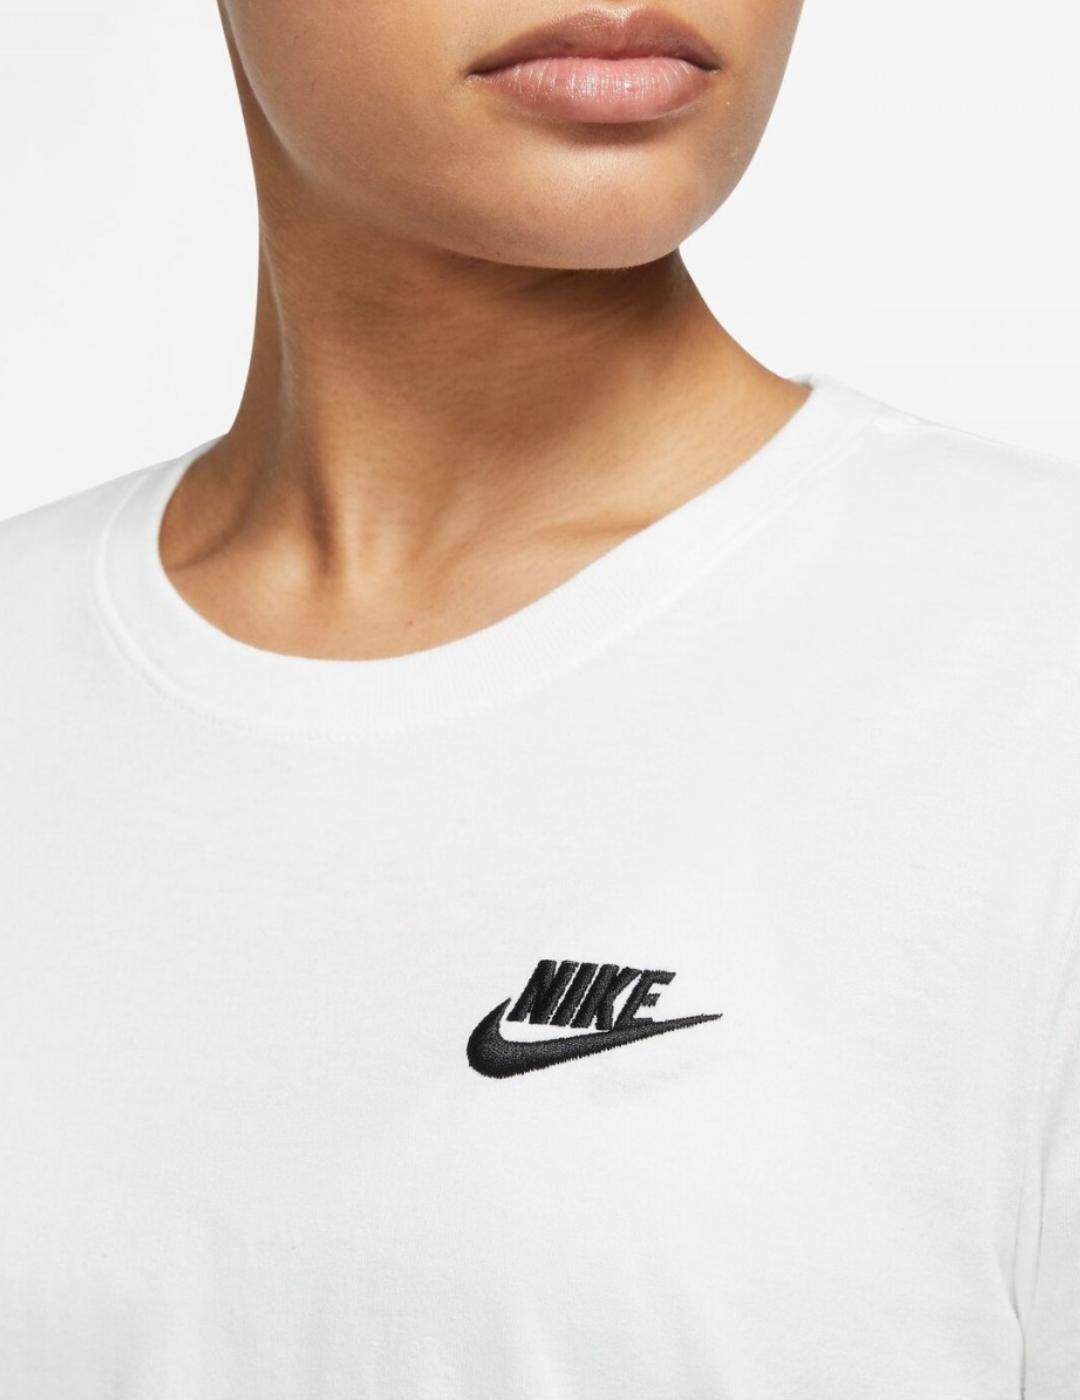 Camiseta Nike blanca para Mujer